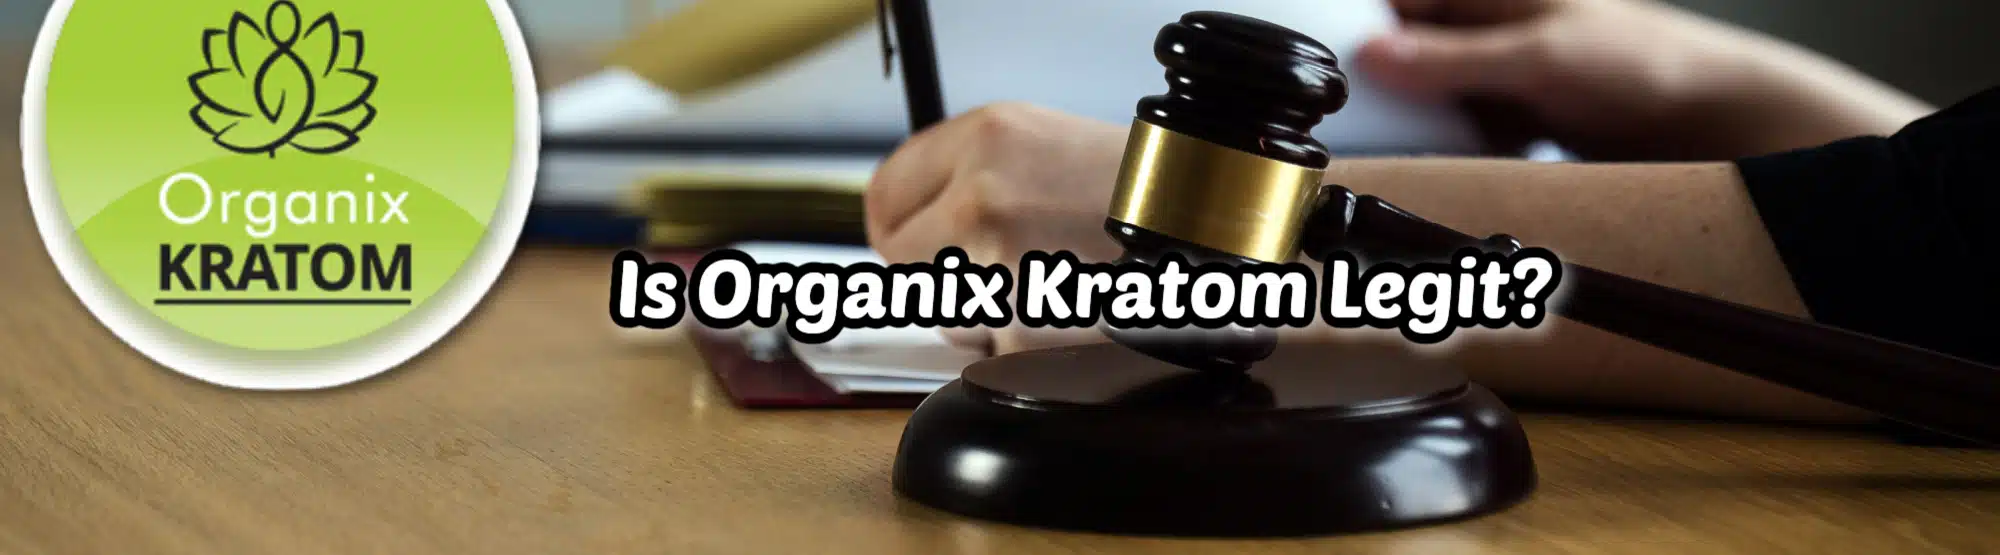 "Is organix kratom legit" banner with company logo